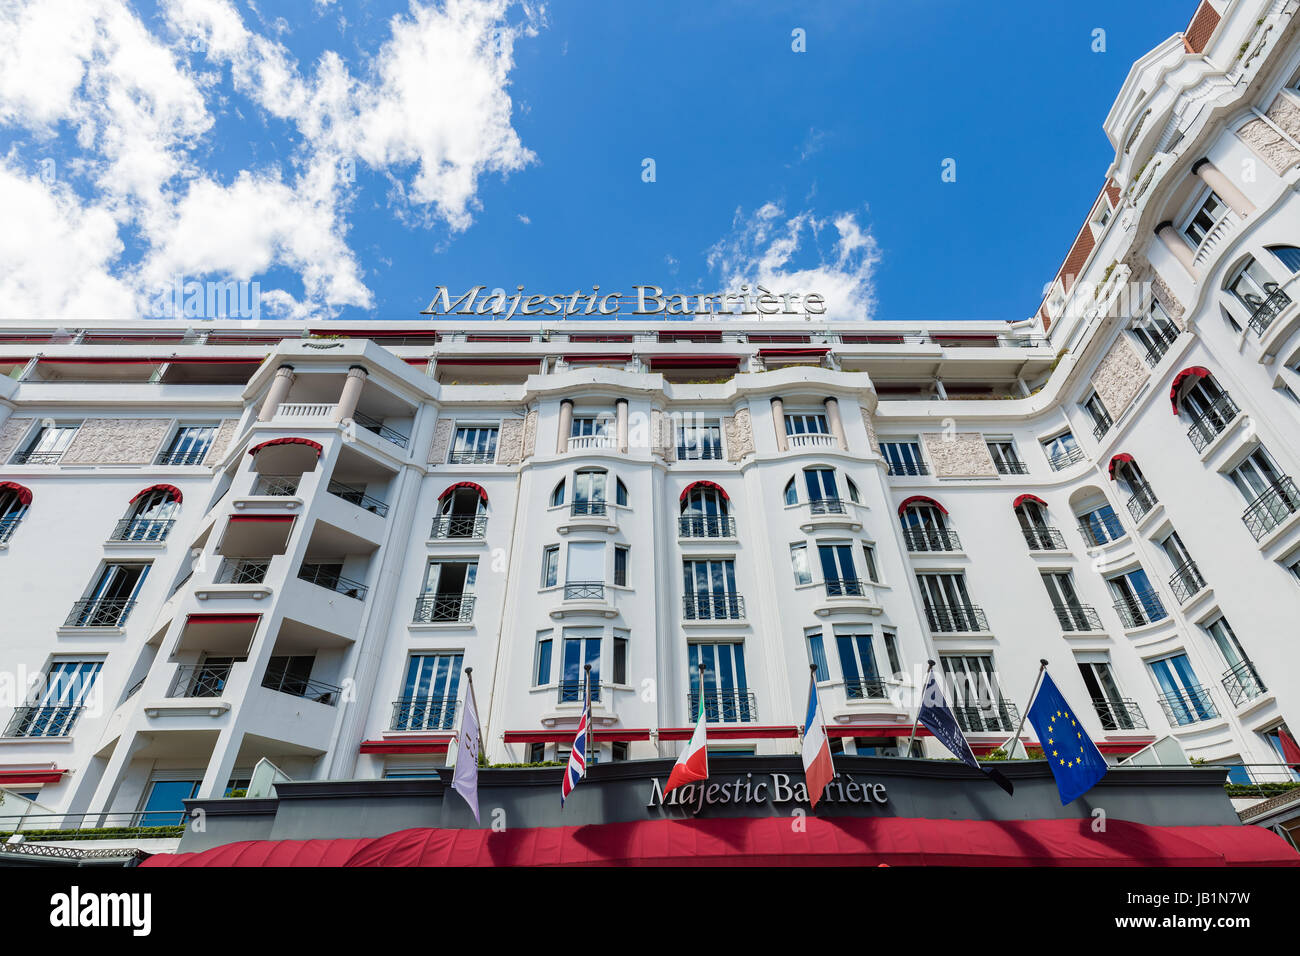 Majestic Barriere Hotel on La Croisette, Cannes, Côte d’Azur, Southern France, France, Europe, PublicGround Stock Photo